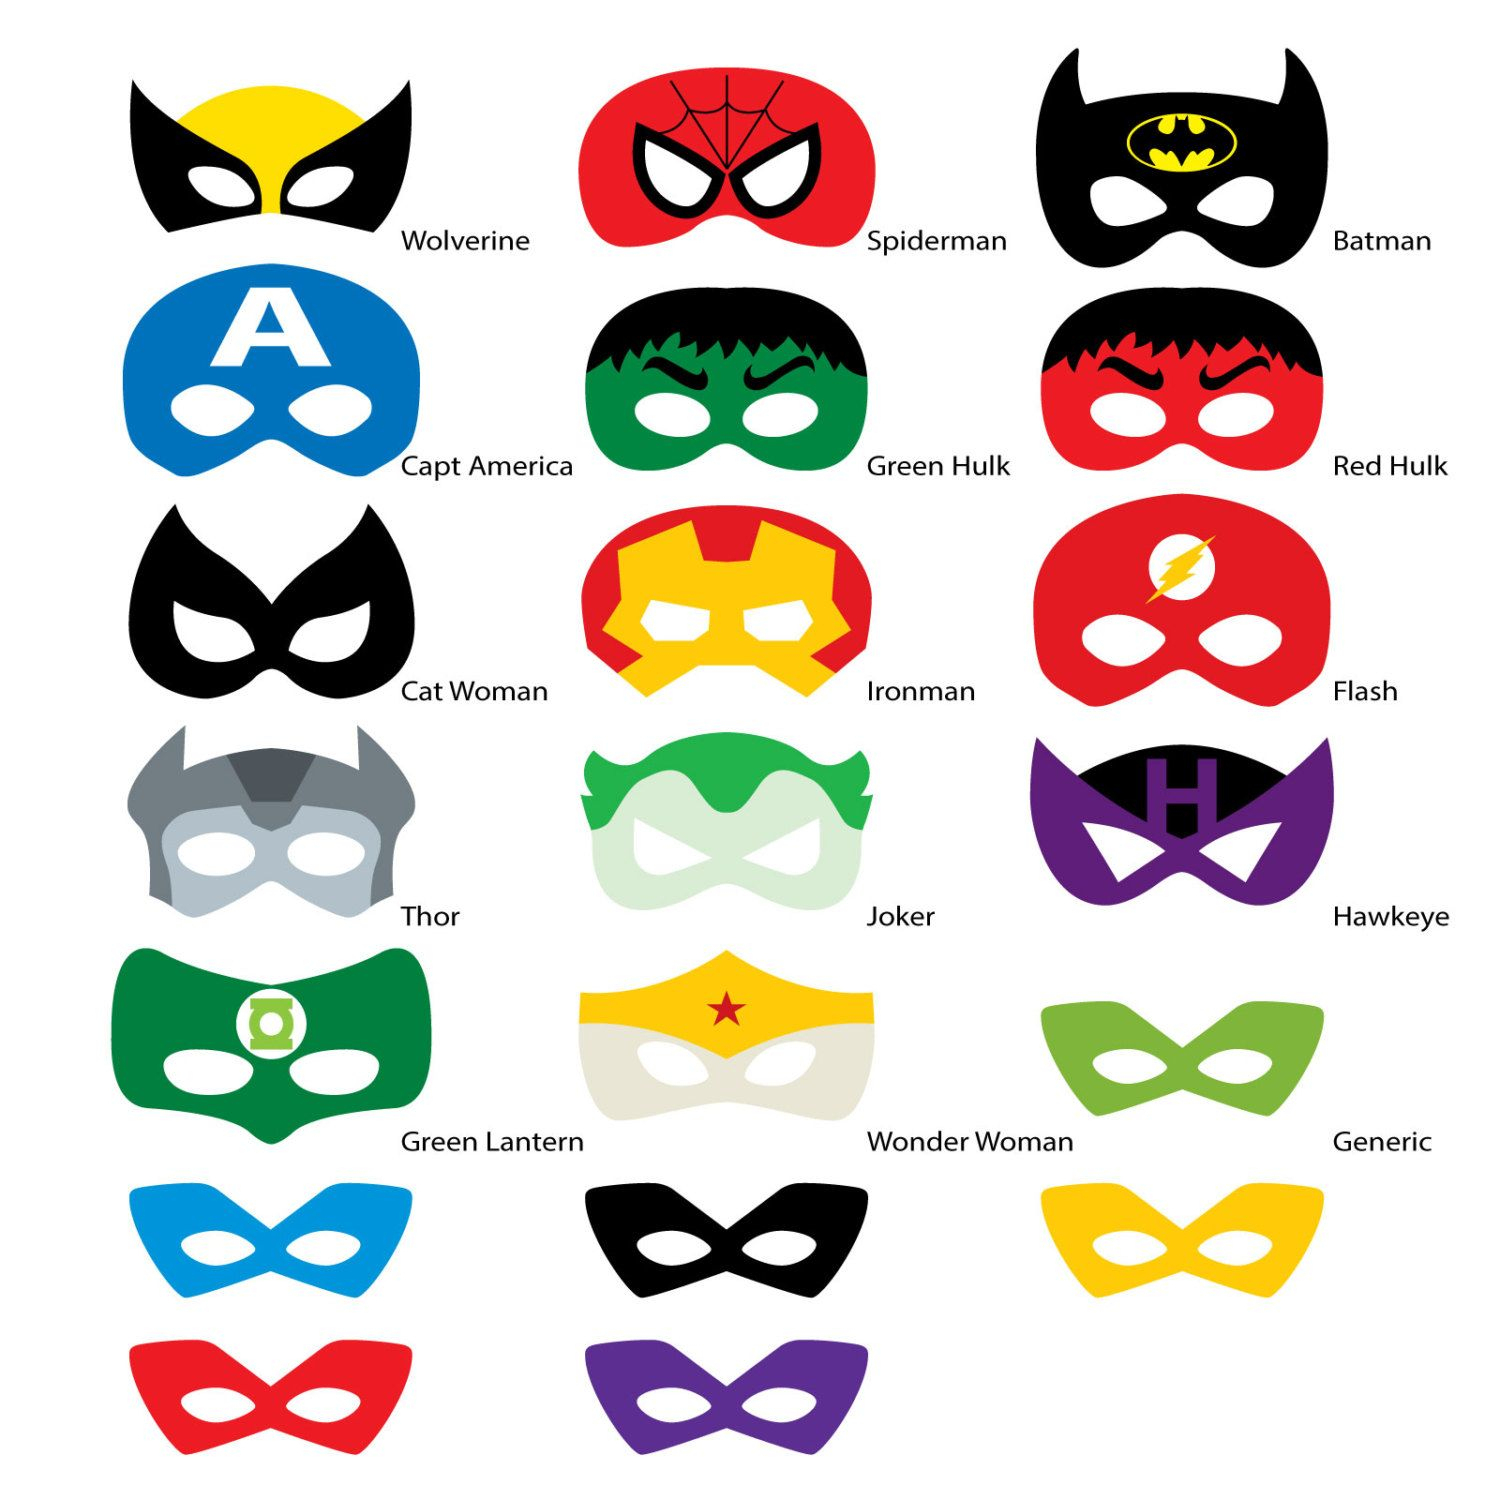 Pinkathy Mccloskey On Masks To Make | Pinterest | Superhero - Free Printable Superhero Photo Booth Props